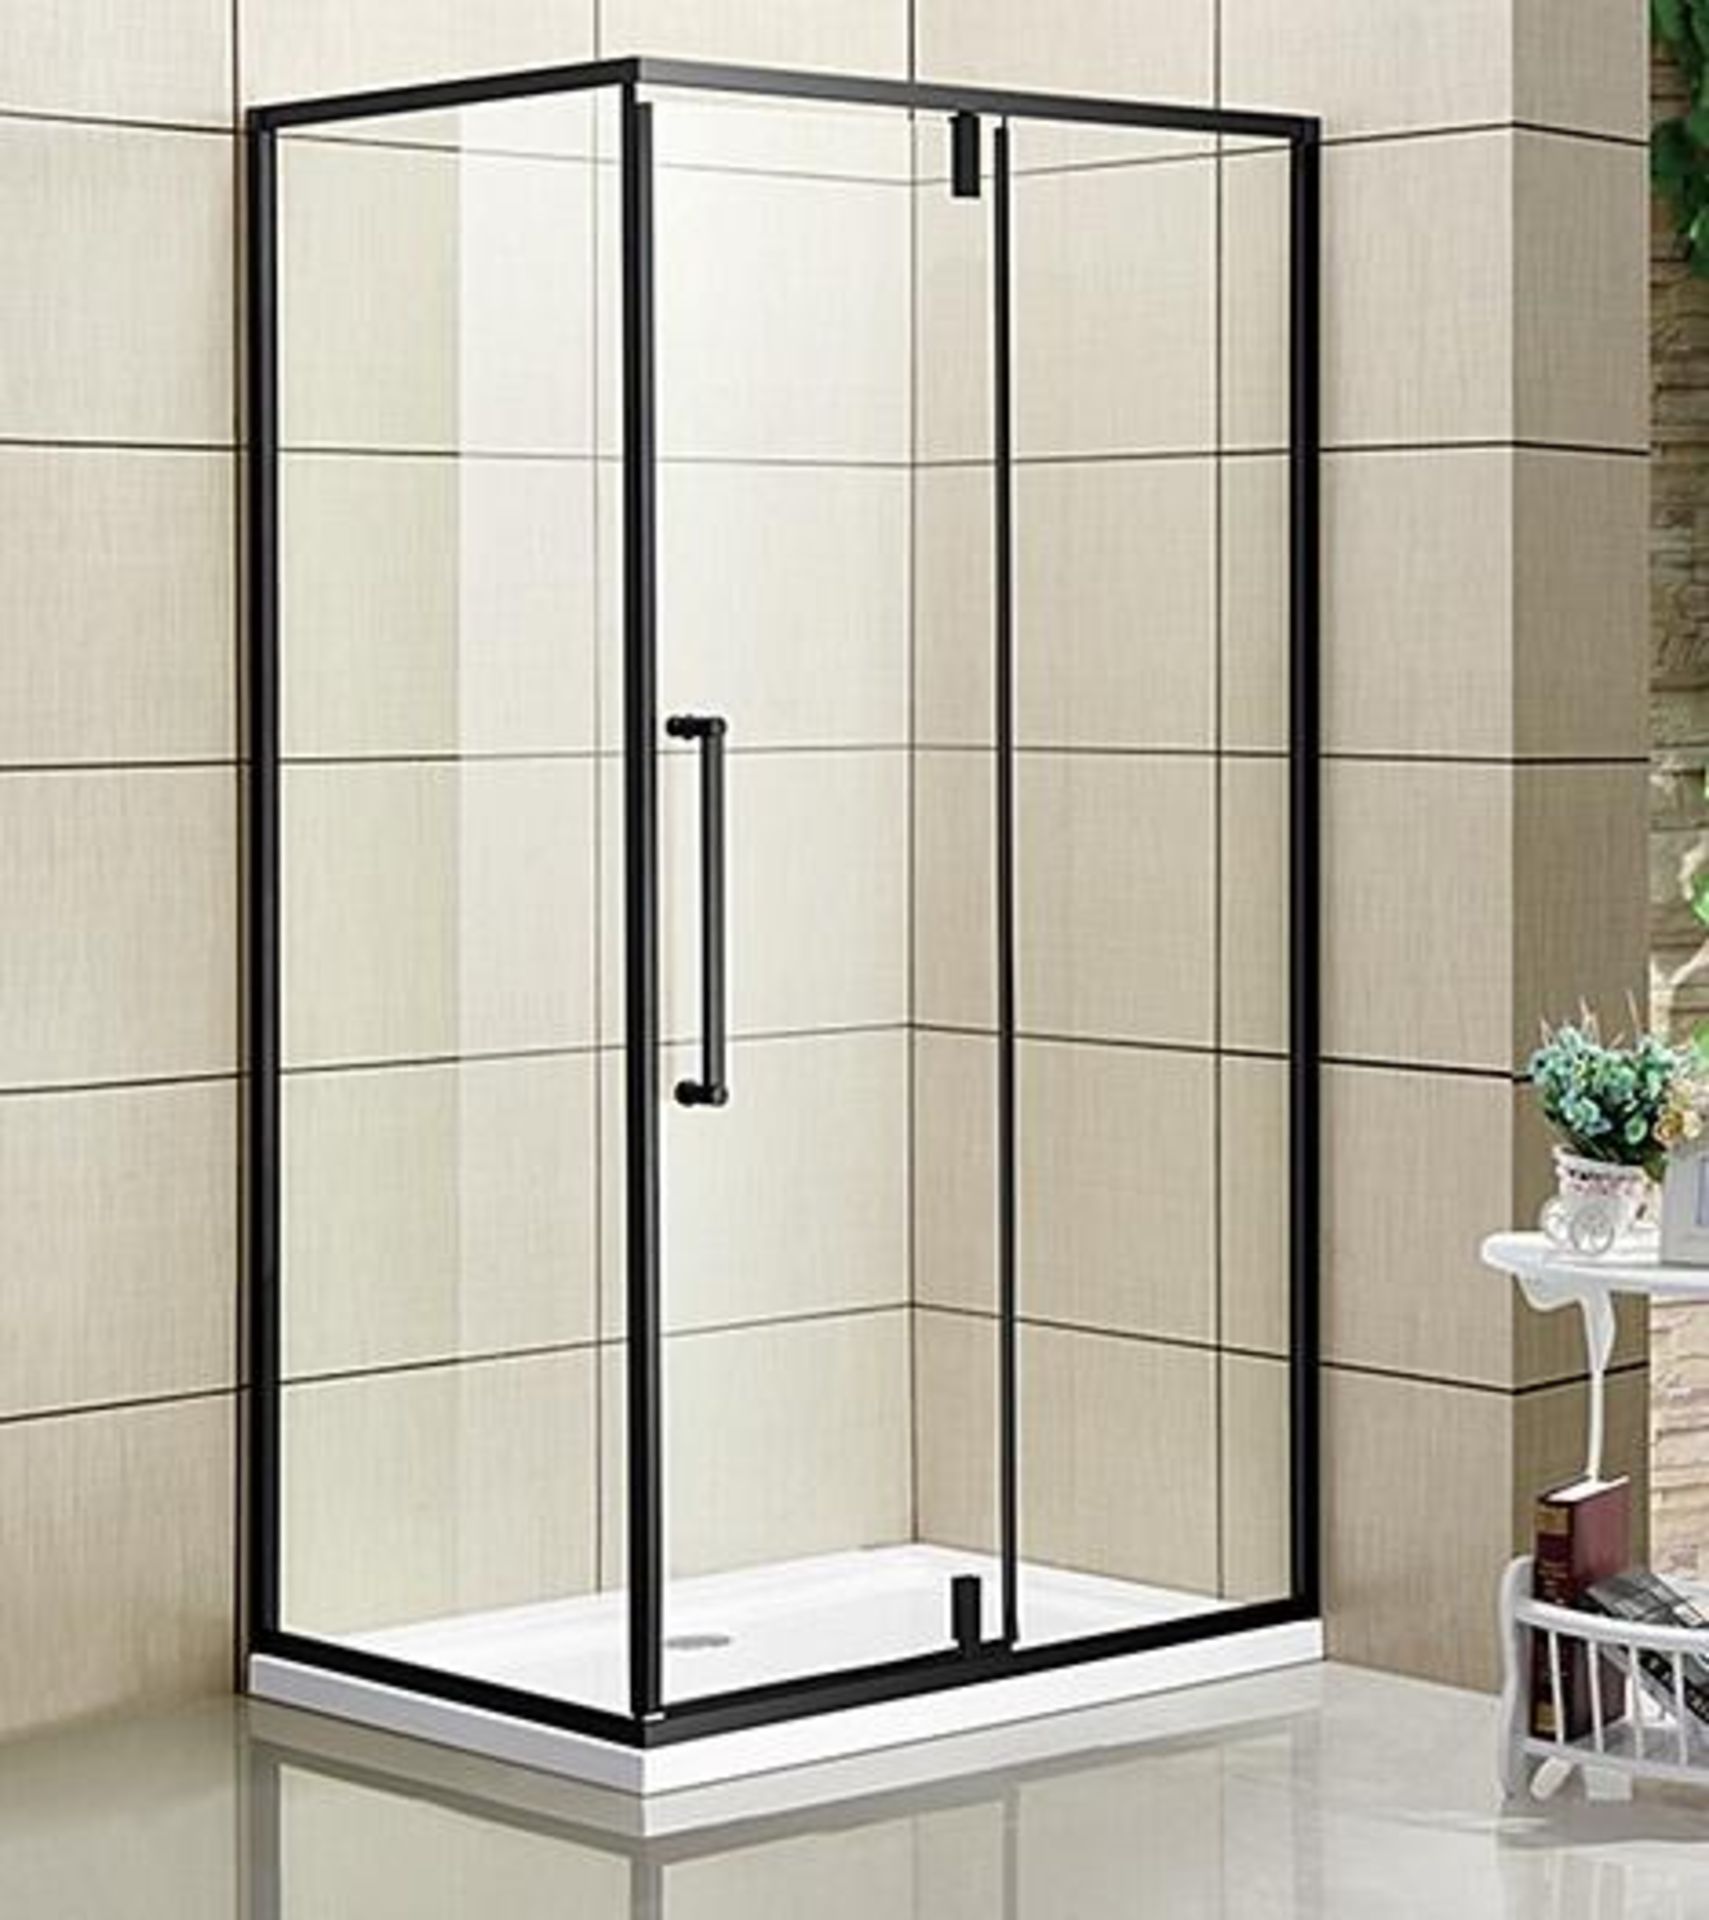 1 x Premium Quality Straight Shower Enclosure With Hinged Door - Frame Colour: Matt Black - Dimensio